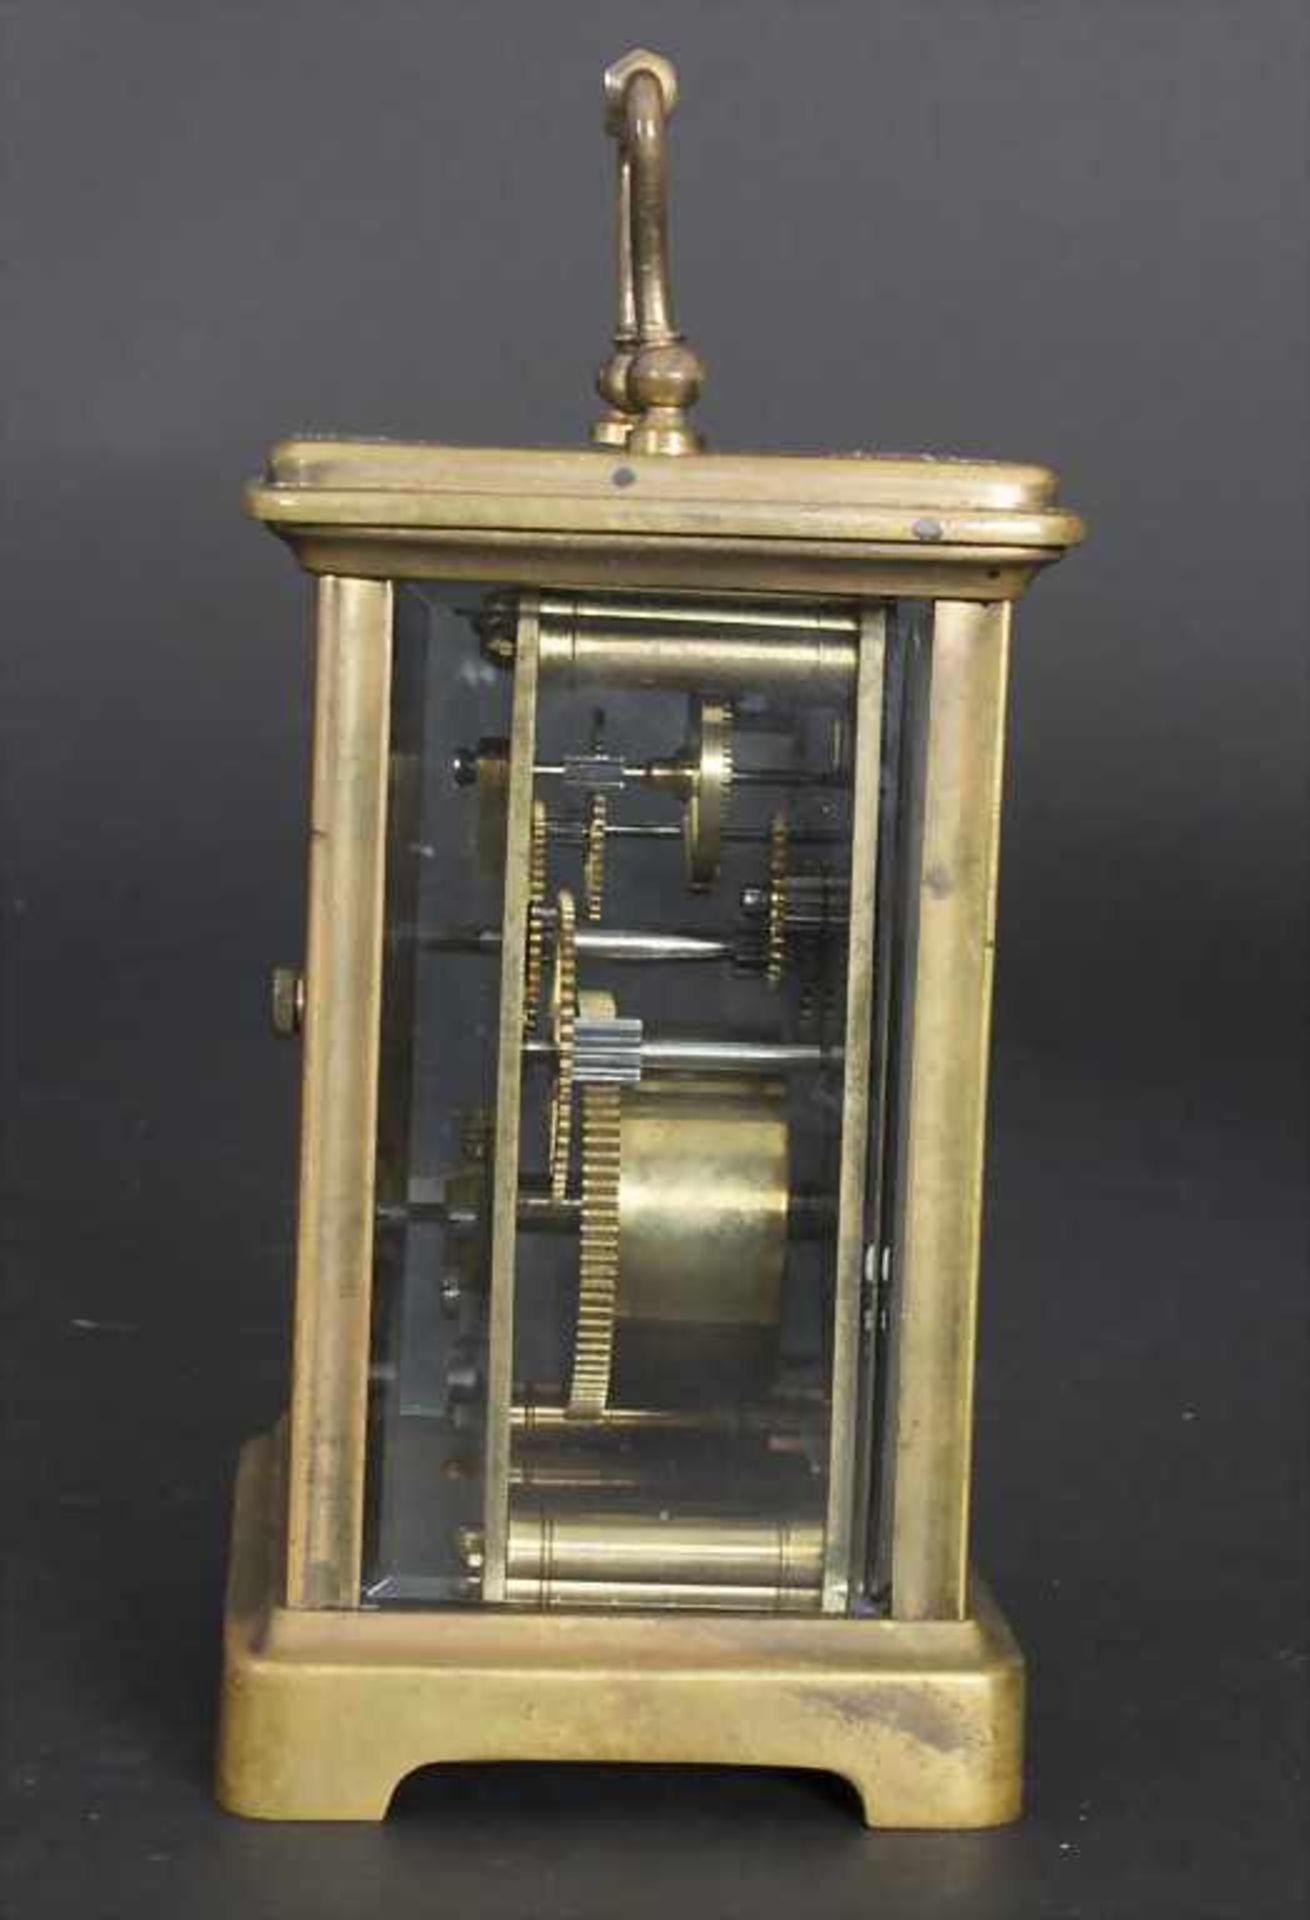 Reiseuhr / A travel clock, um 1900Material: Reiseuhr im Etui, mit Aufzug-Schlüssel,Gehäuse: rundum - Image 5 of 7